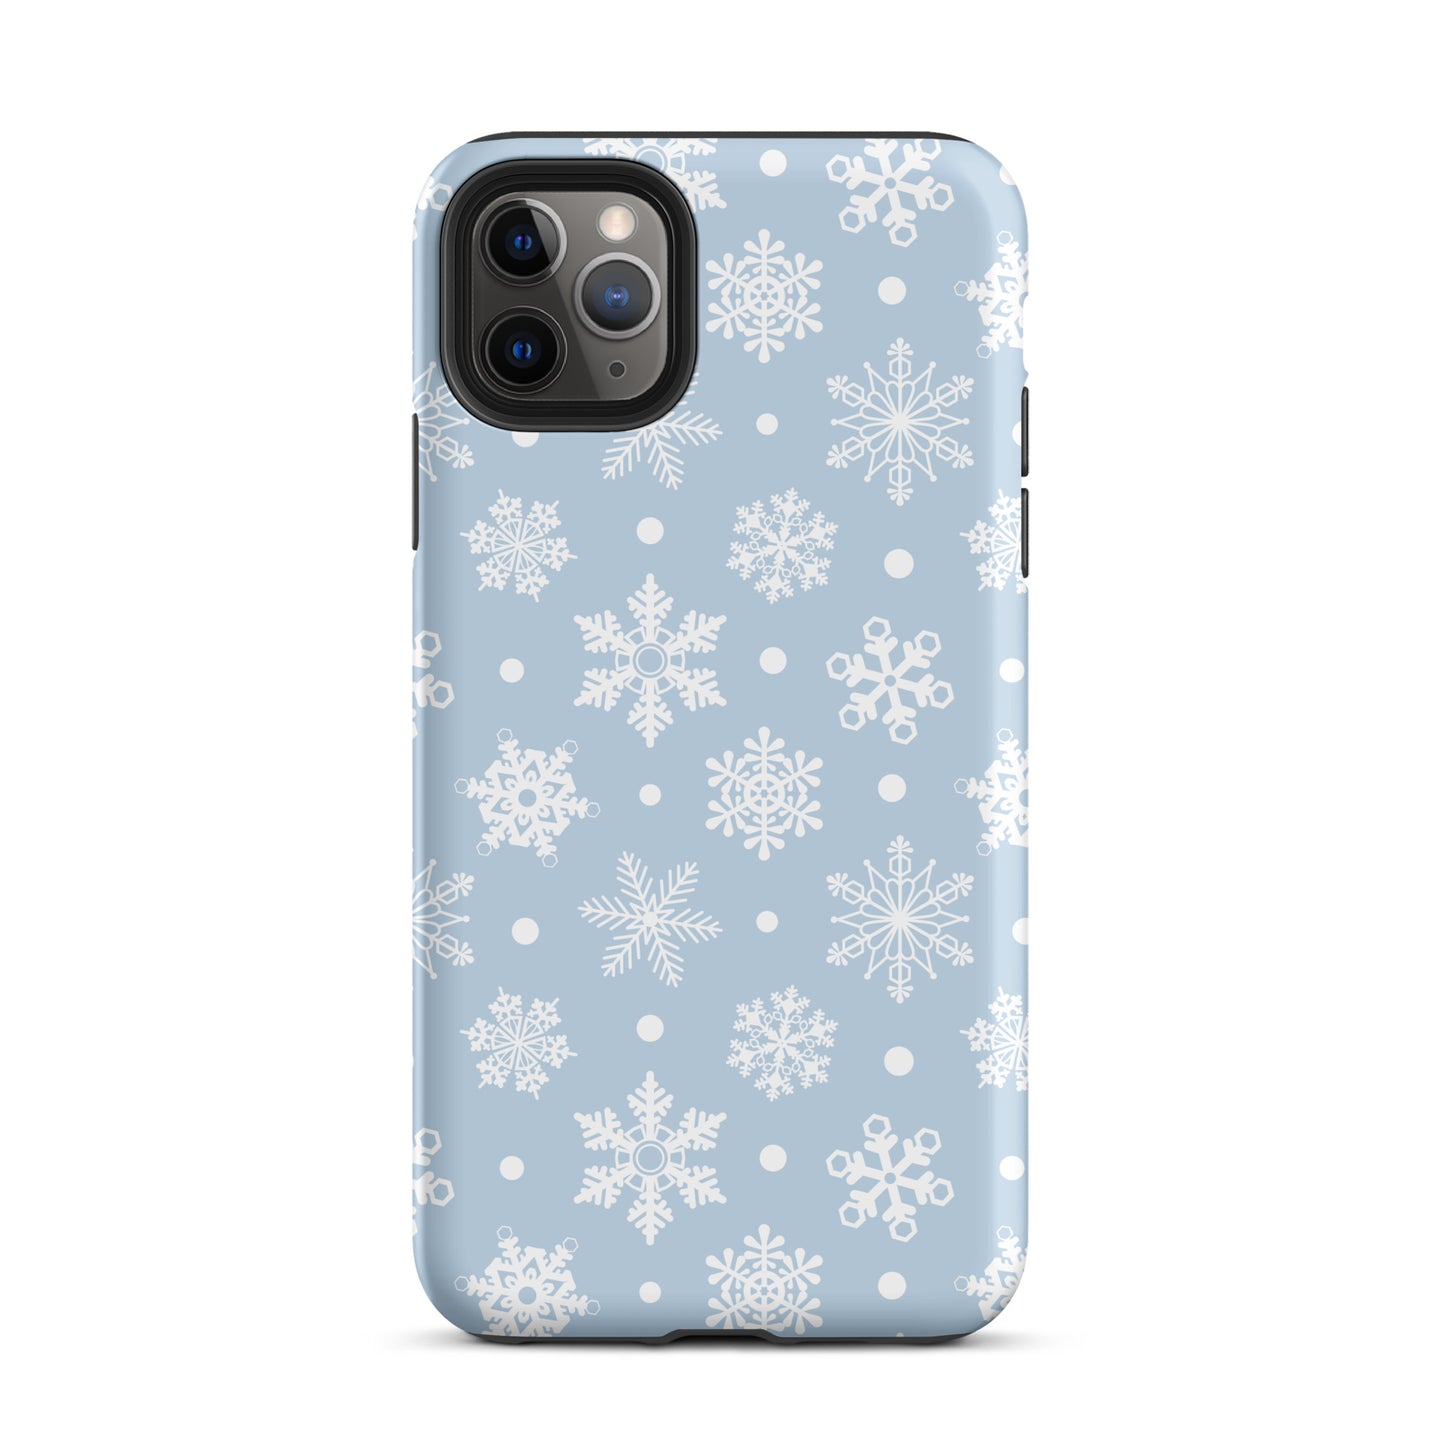 Snowflakes iPhone Case iPhone 11 Pro Max Matte